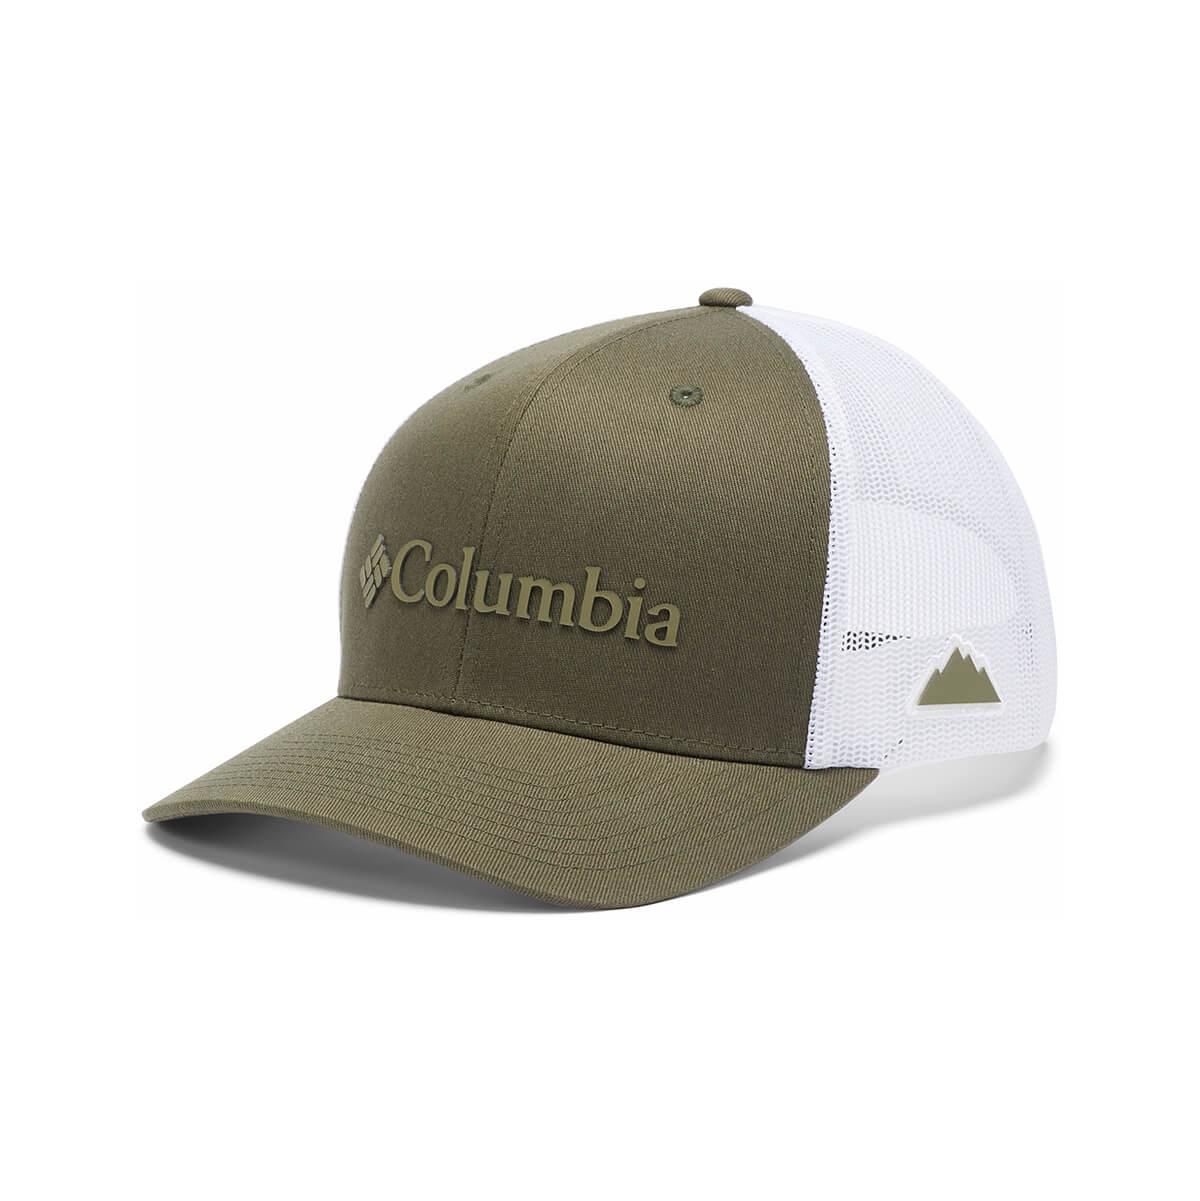  Columbia Mesh Snap Back Hat